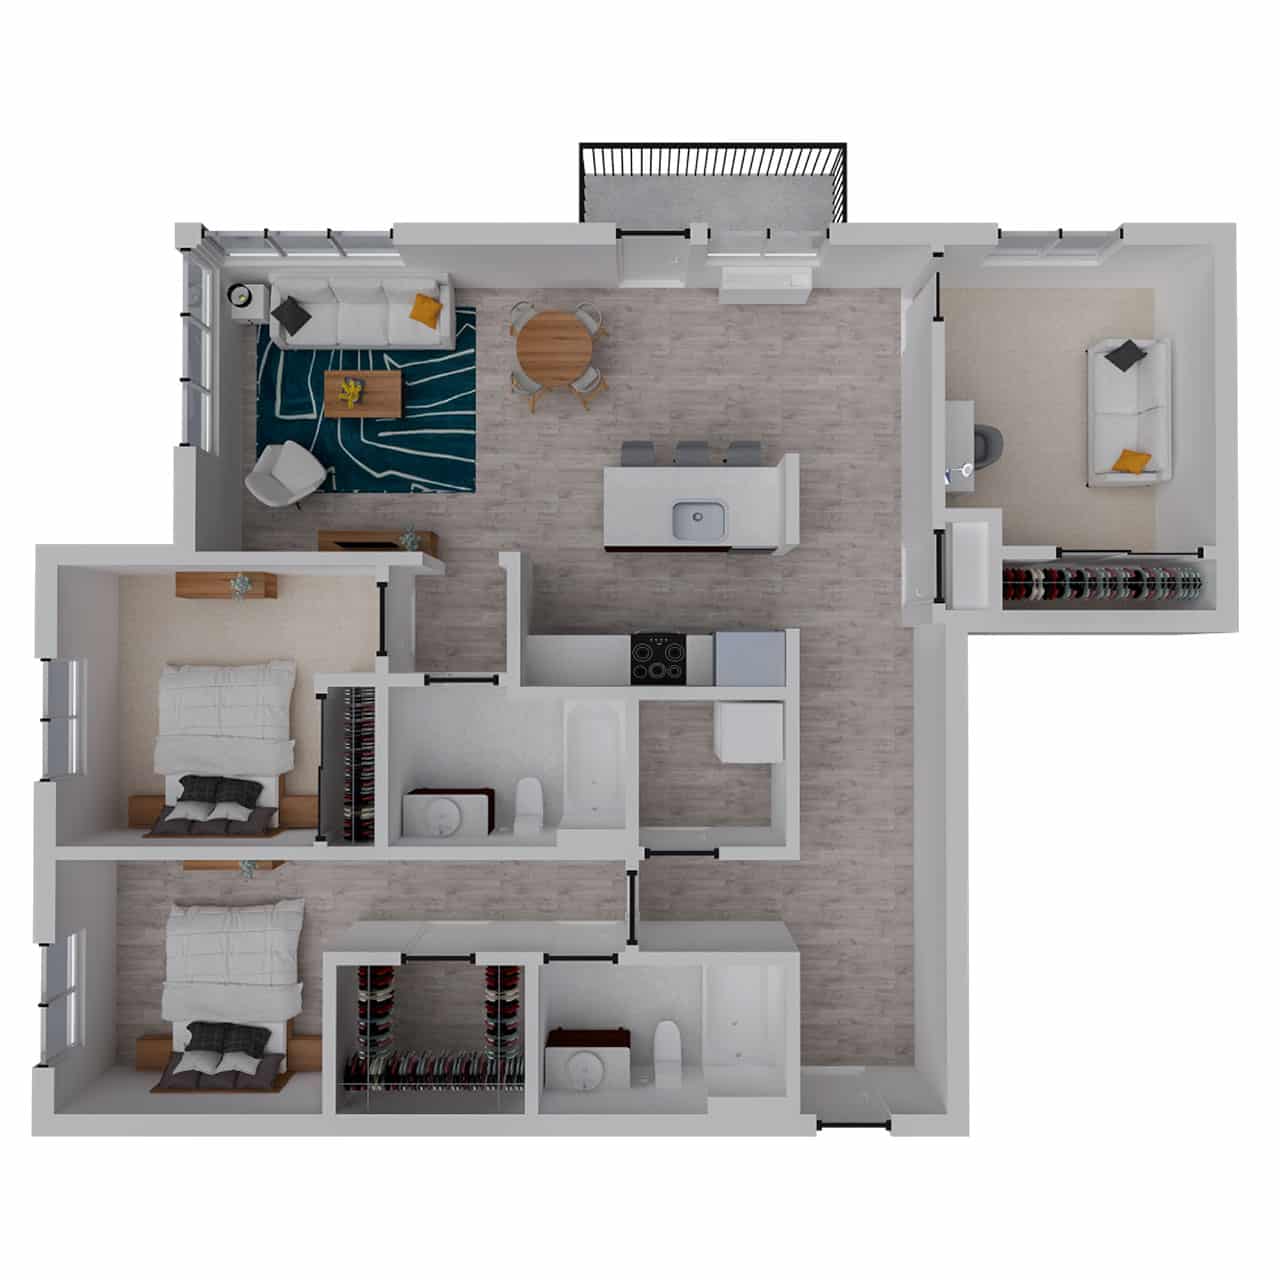 Attwell, C1 floor plan, 3 bedroom, 2 bath.